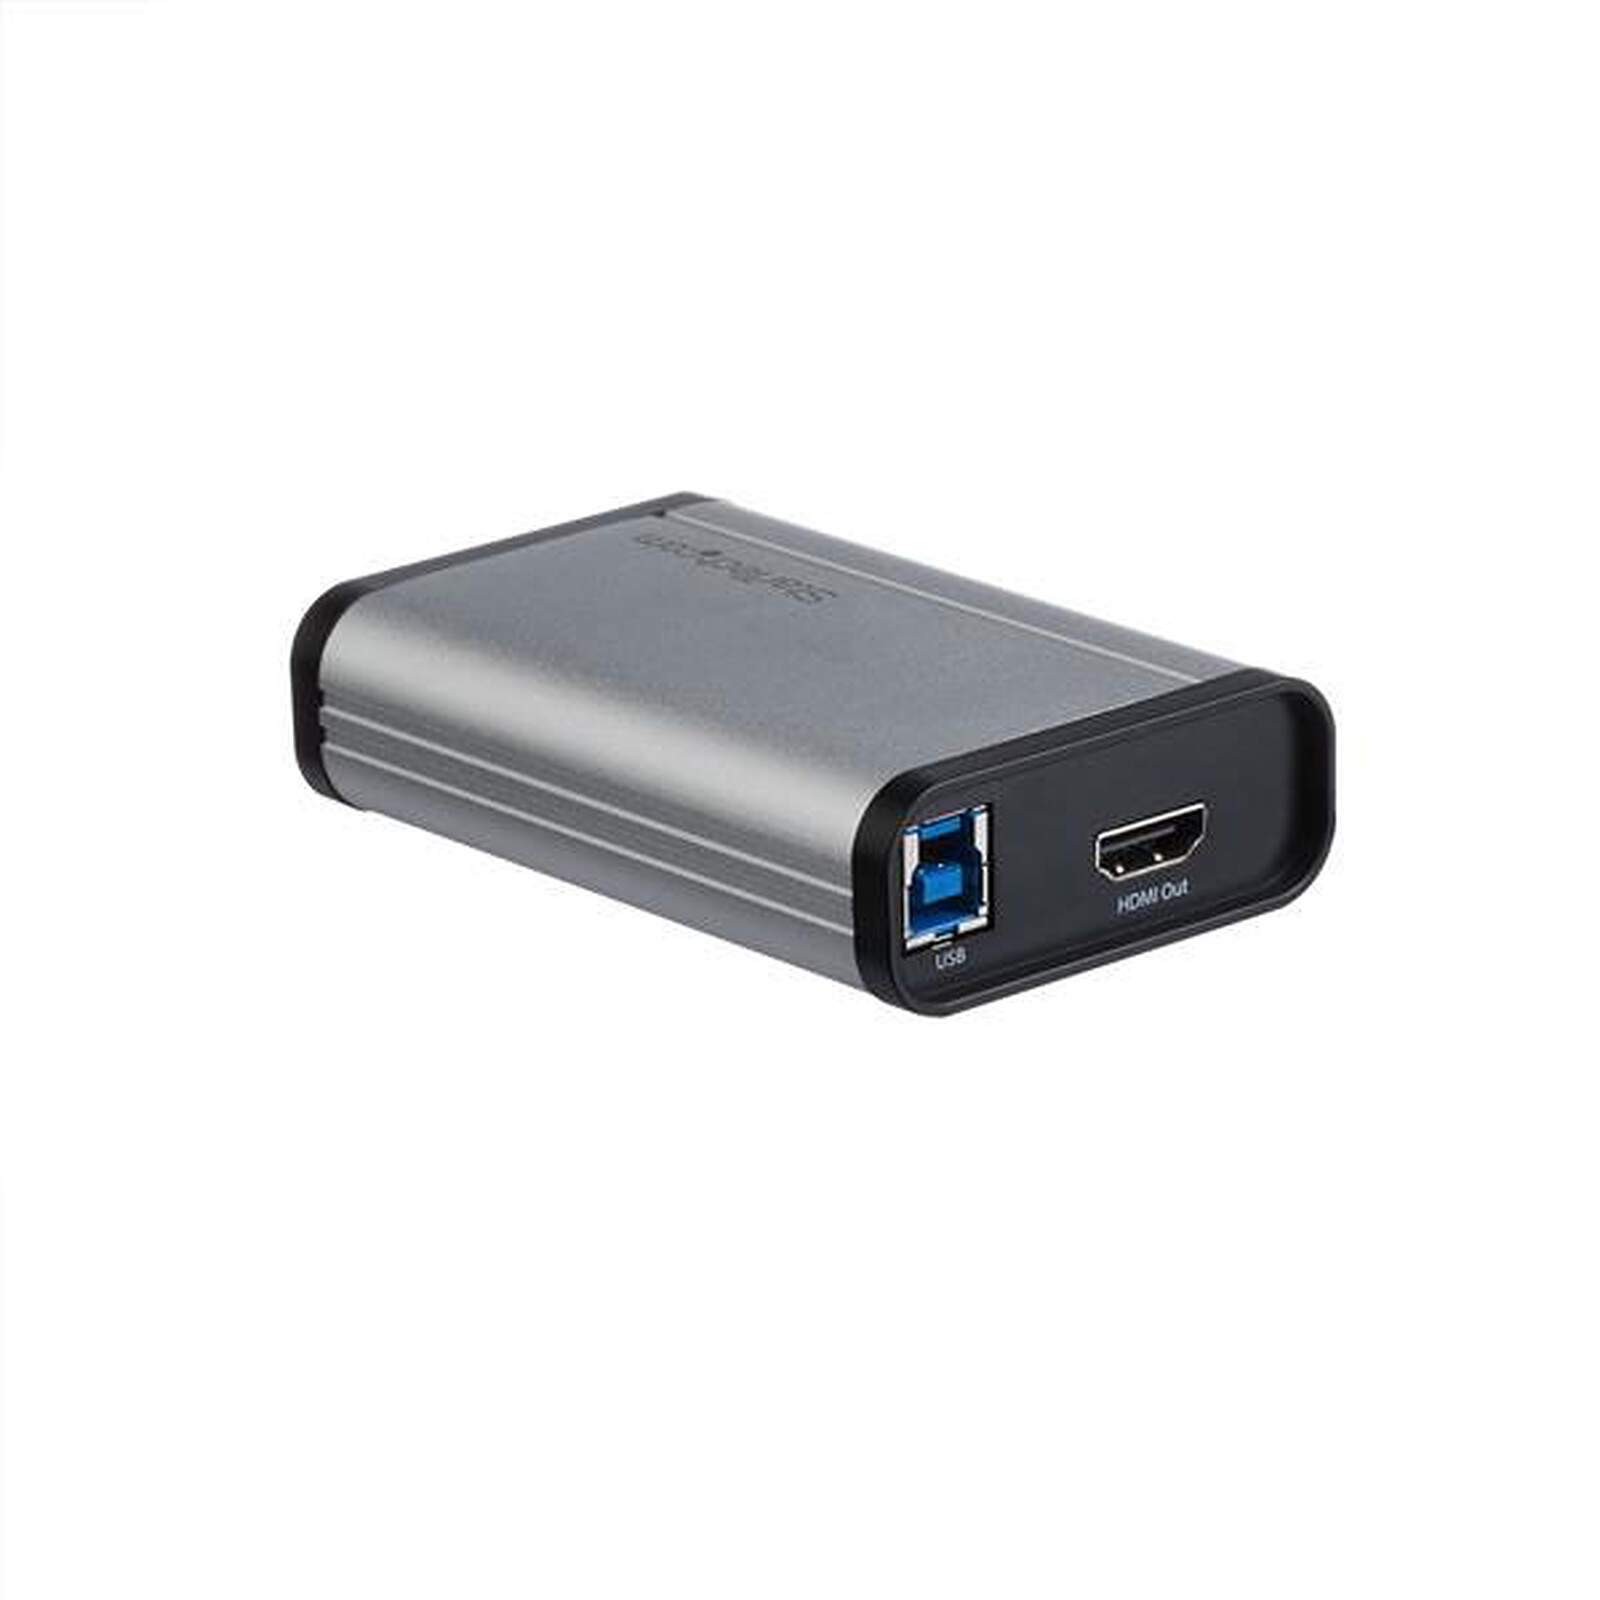 Vivolink 4K 60Hz USB 3.0 HDMI video capture card - Video capturing devices  - LDLC 3-year warranty